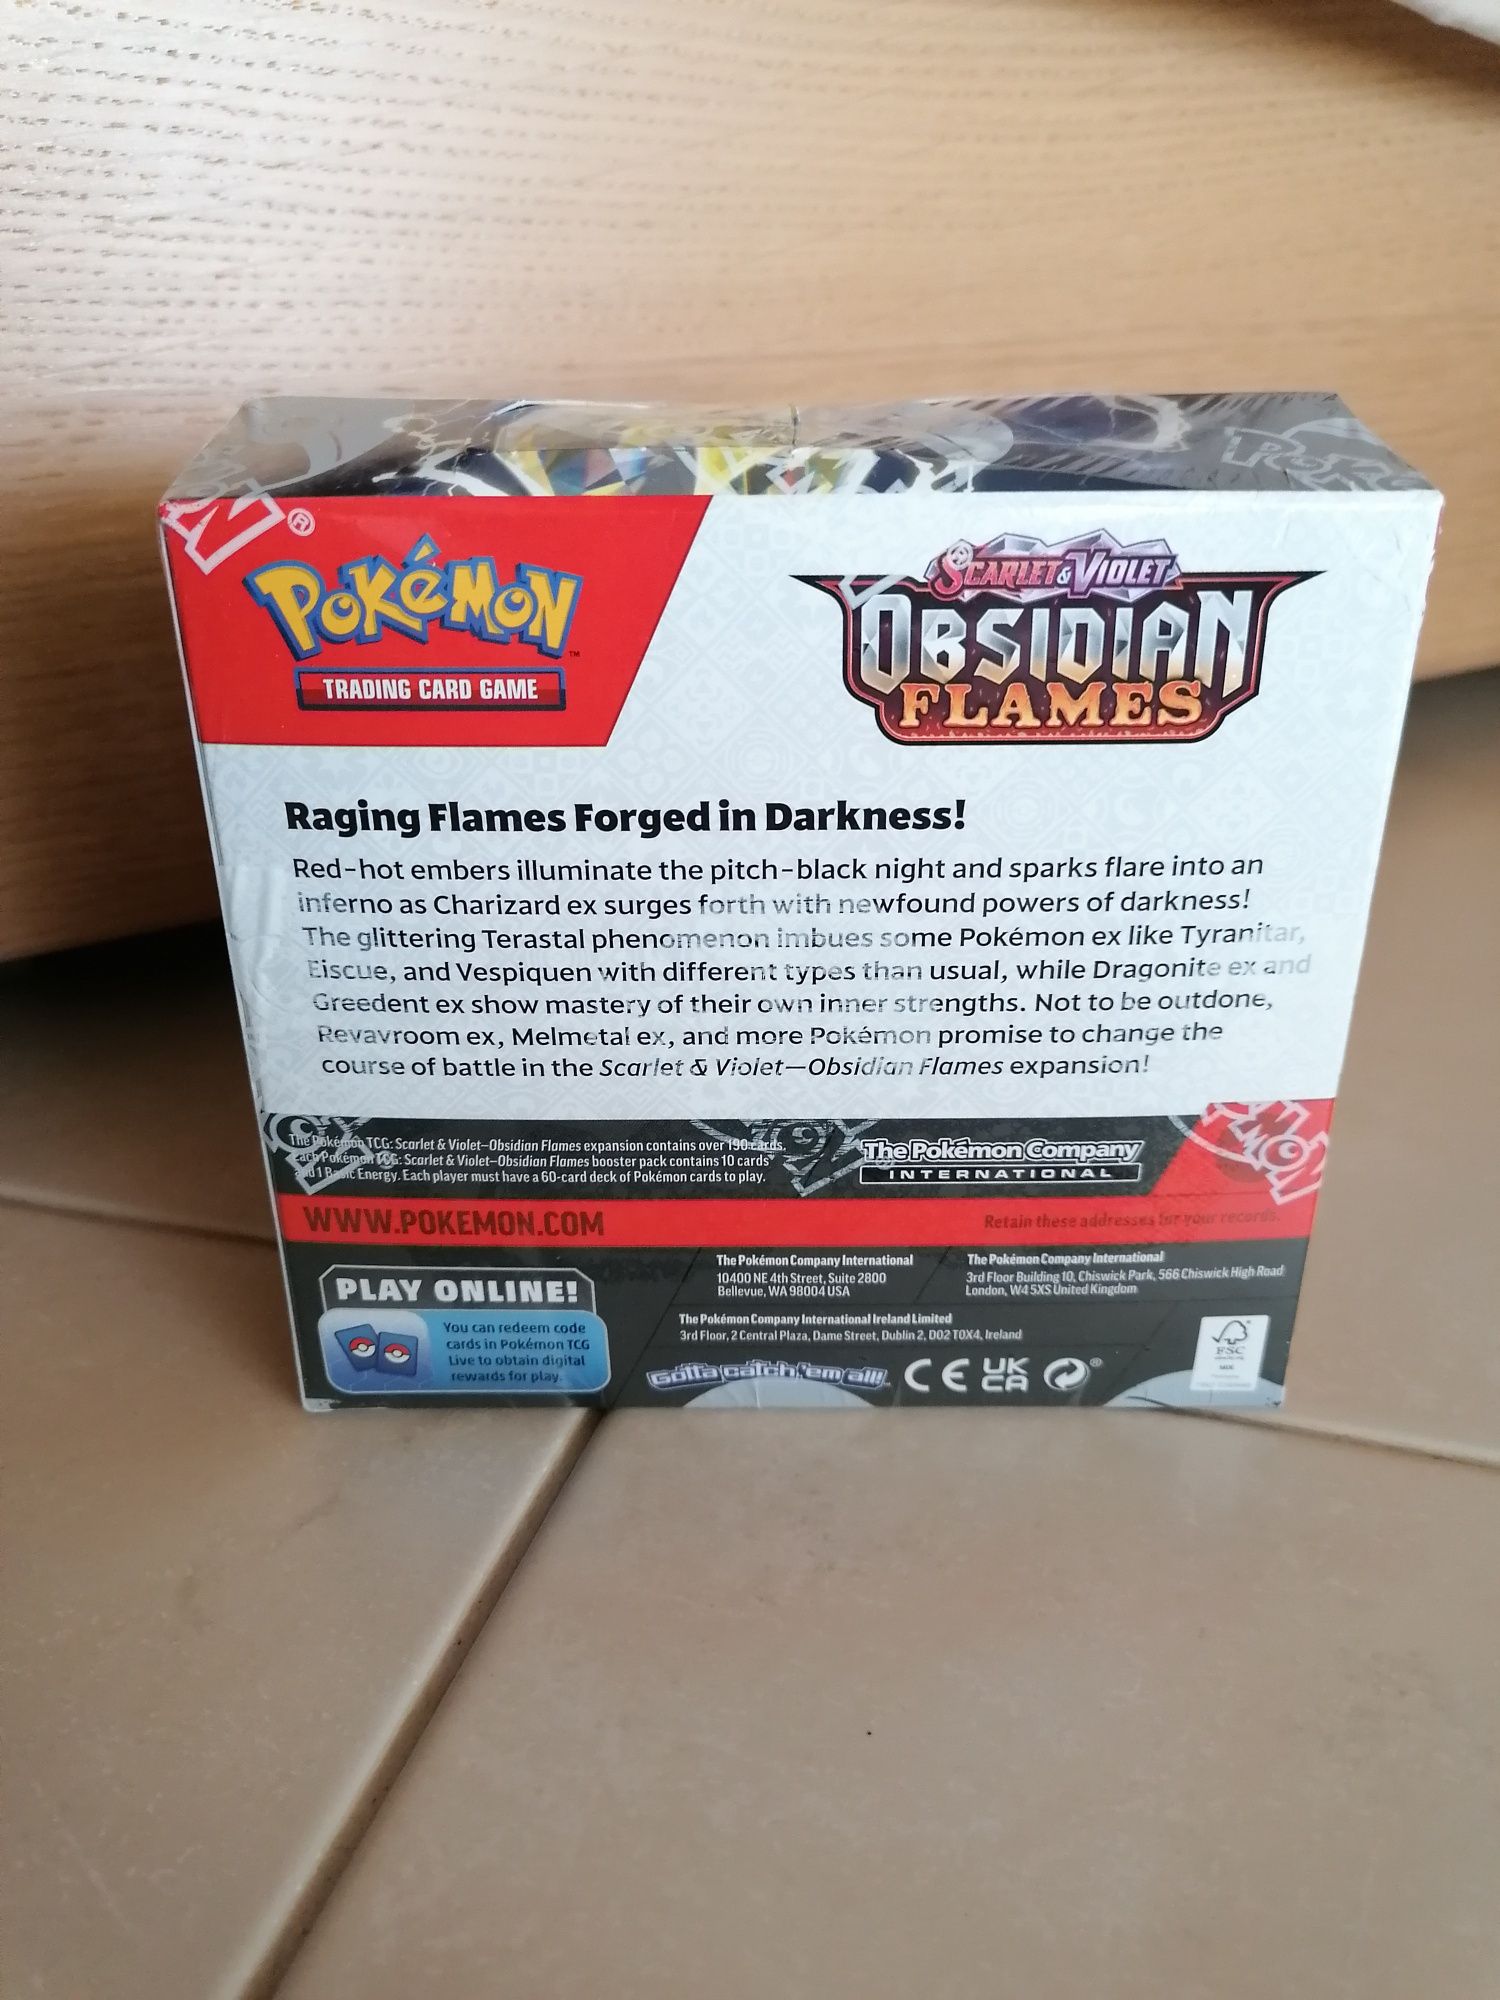 Pokémon Booster Box - Obsidian Flames